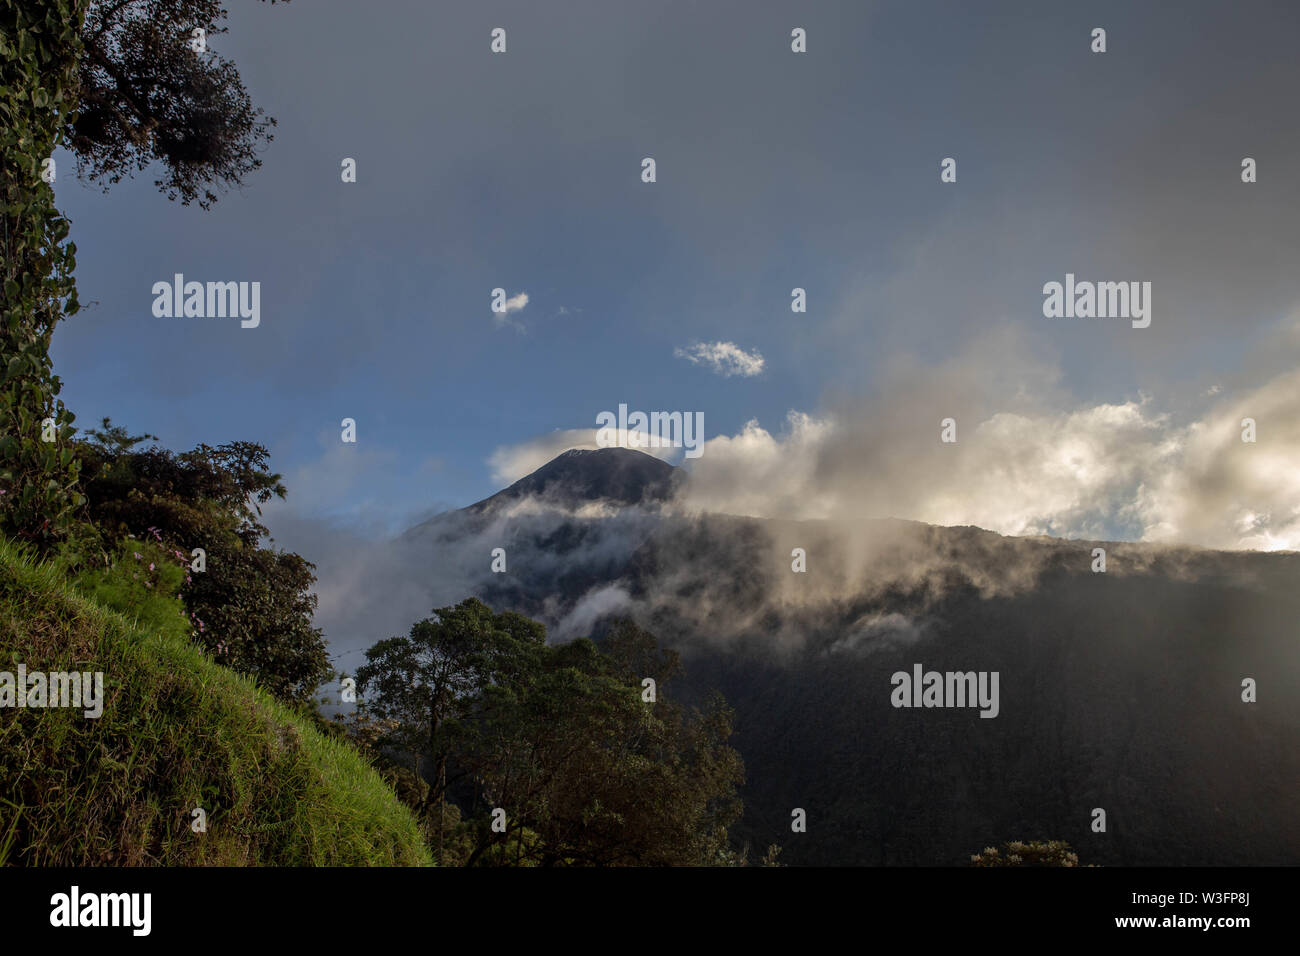 Swing am Ende der Welt gegen Vulkan Tungurahua im Sonnenuntergang Explosion Stockfoto